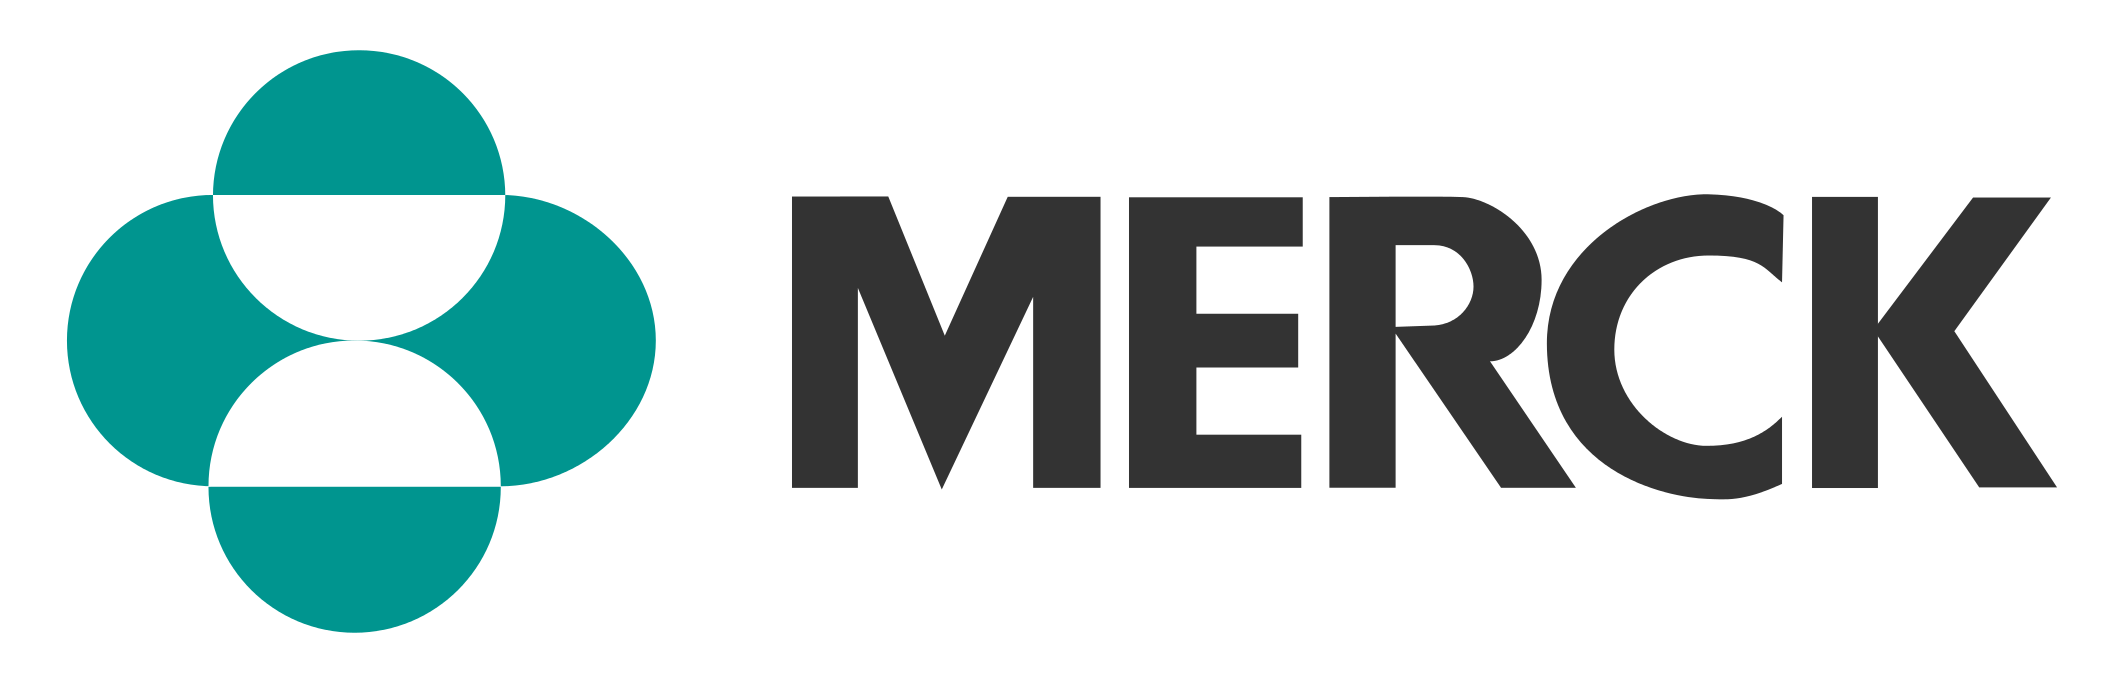 Merck and Co., Inc